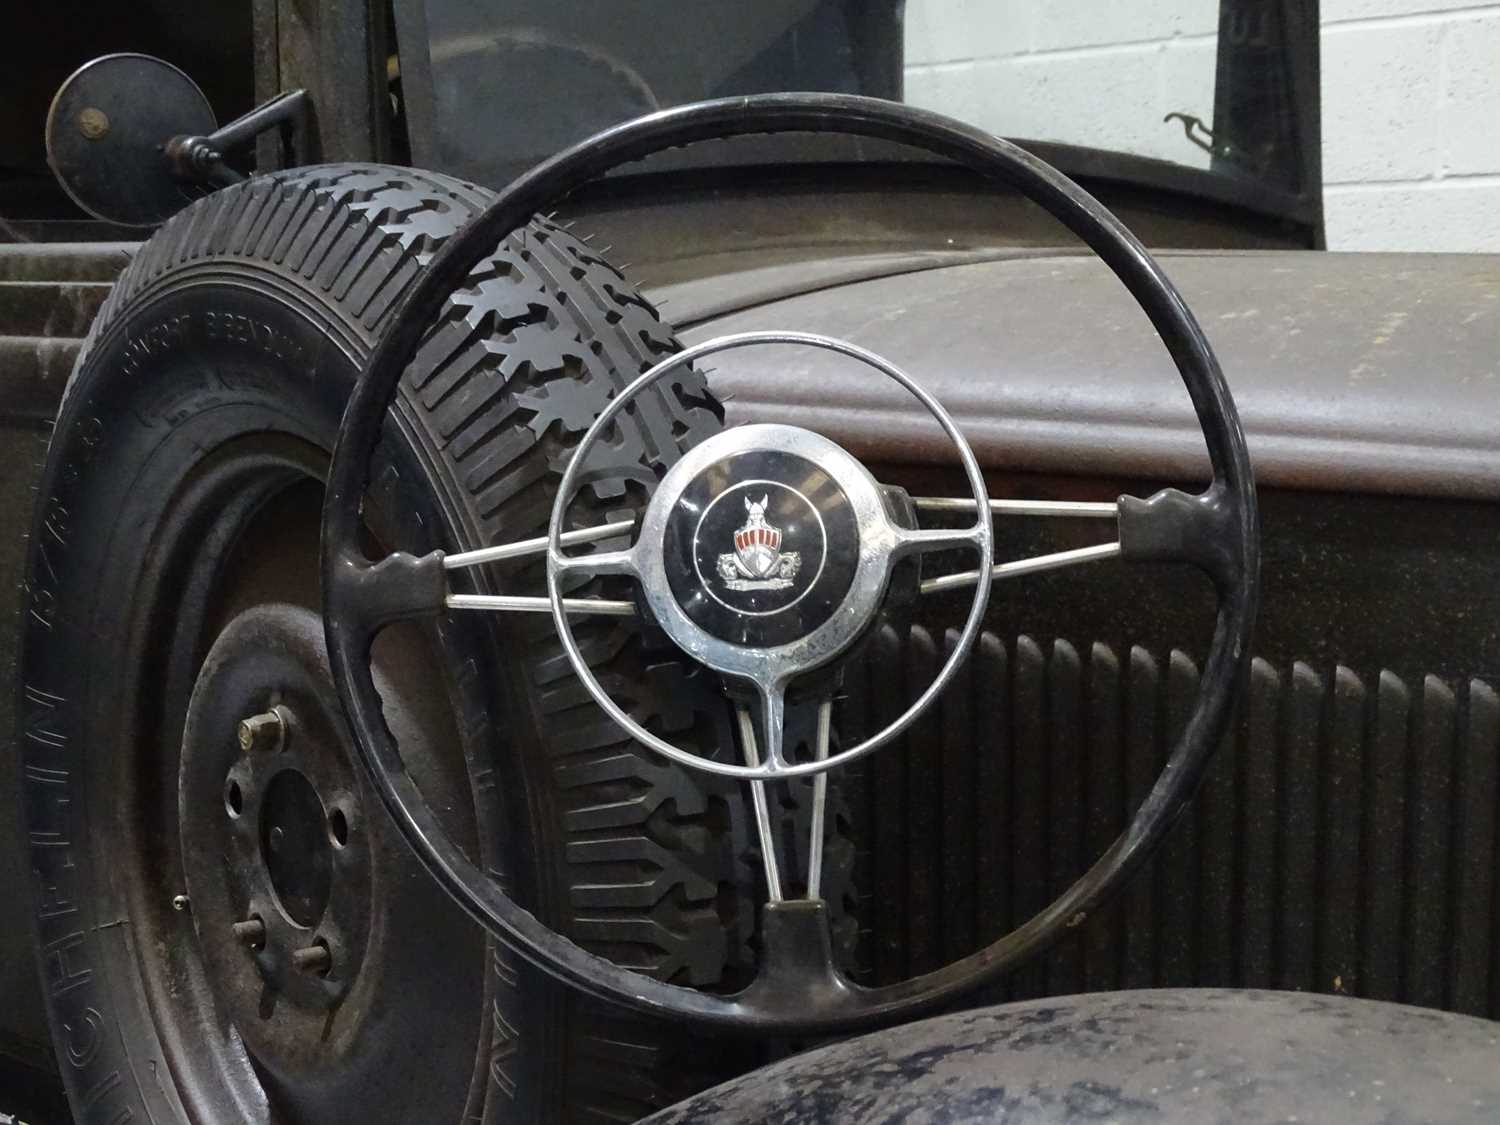 Lot 9 - Rover sport steering wheel